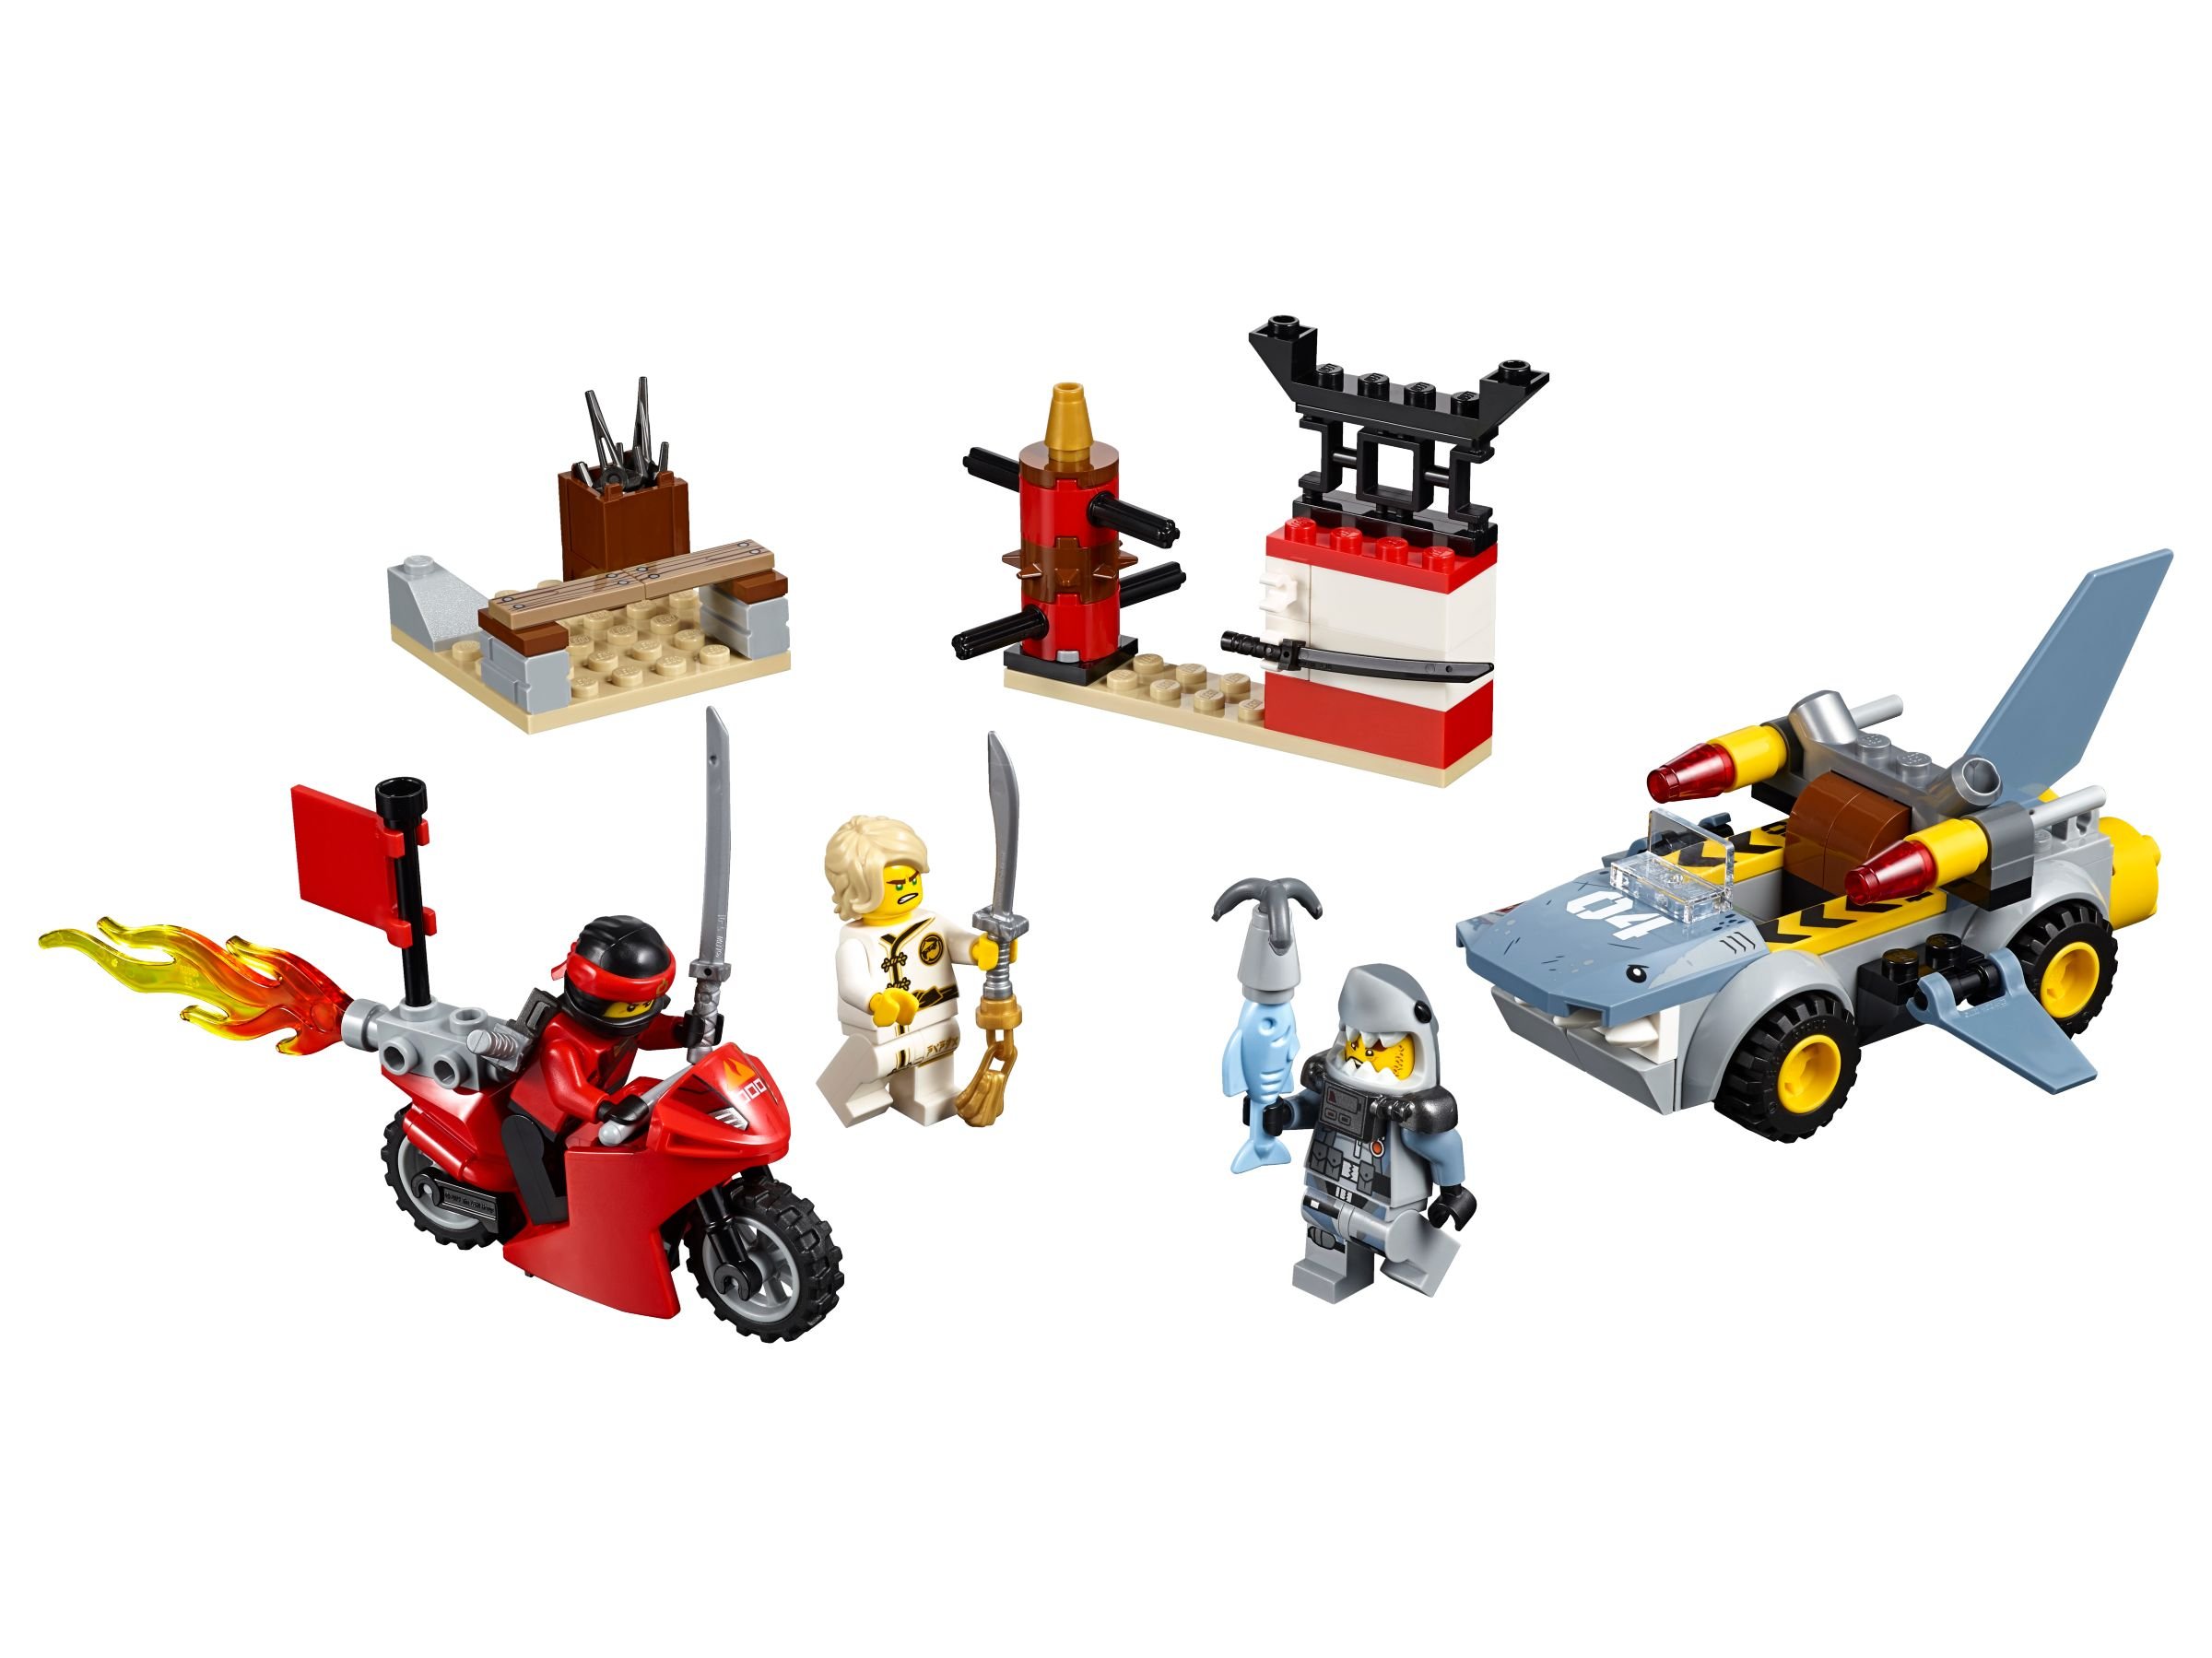 LEGO Juniors 10739 Haiangriff LEGO_10739.jpg